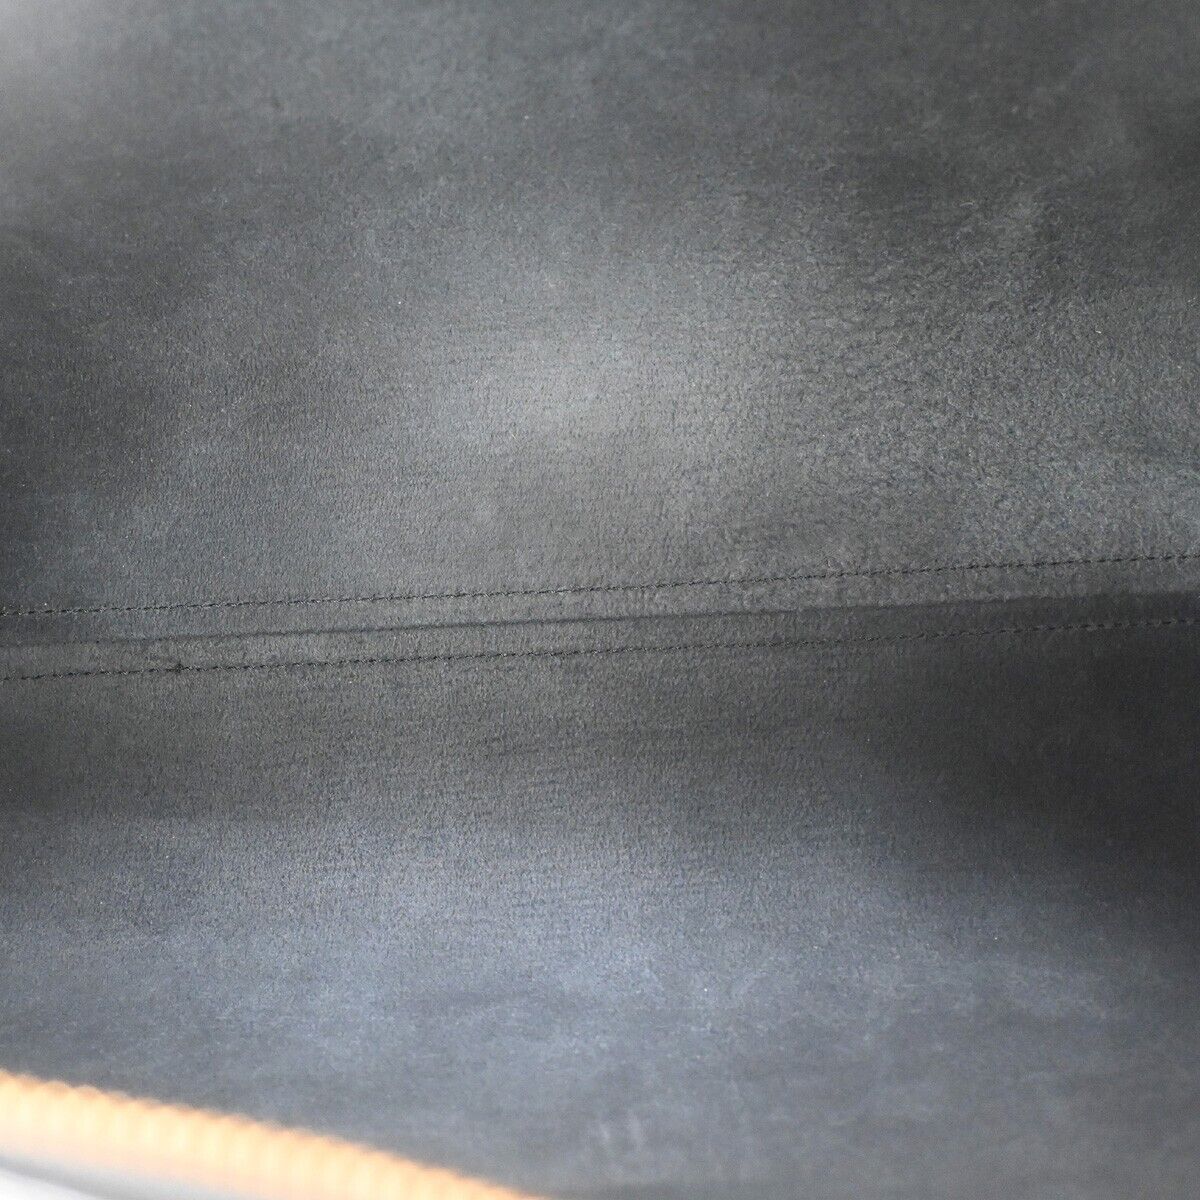 Louis Vuitton Speedy 35 Black Leather Handbag (Pre-Owned)